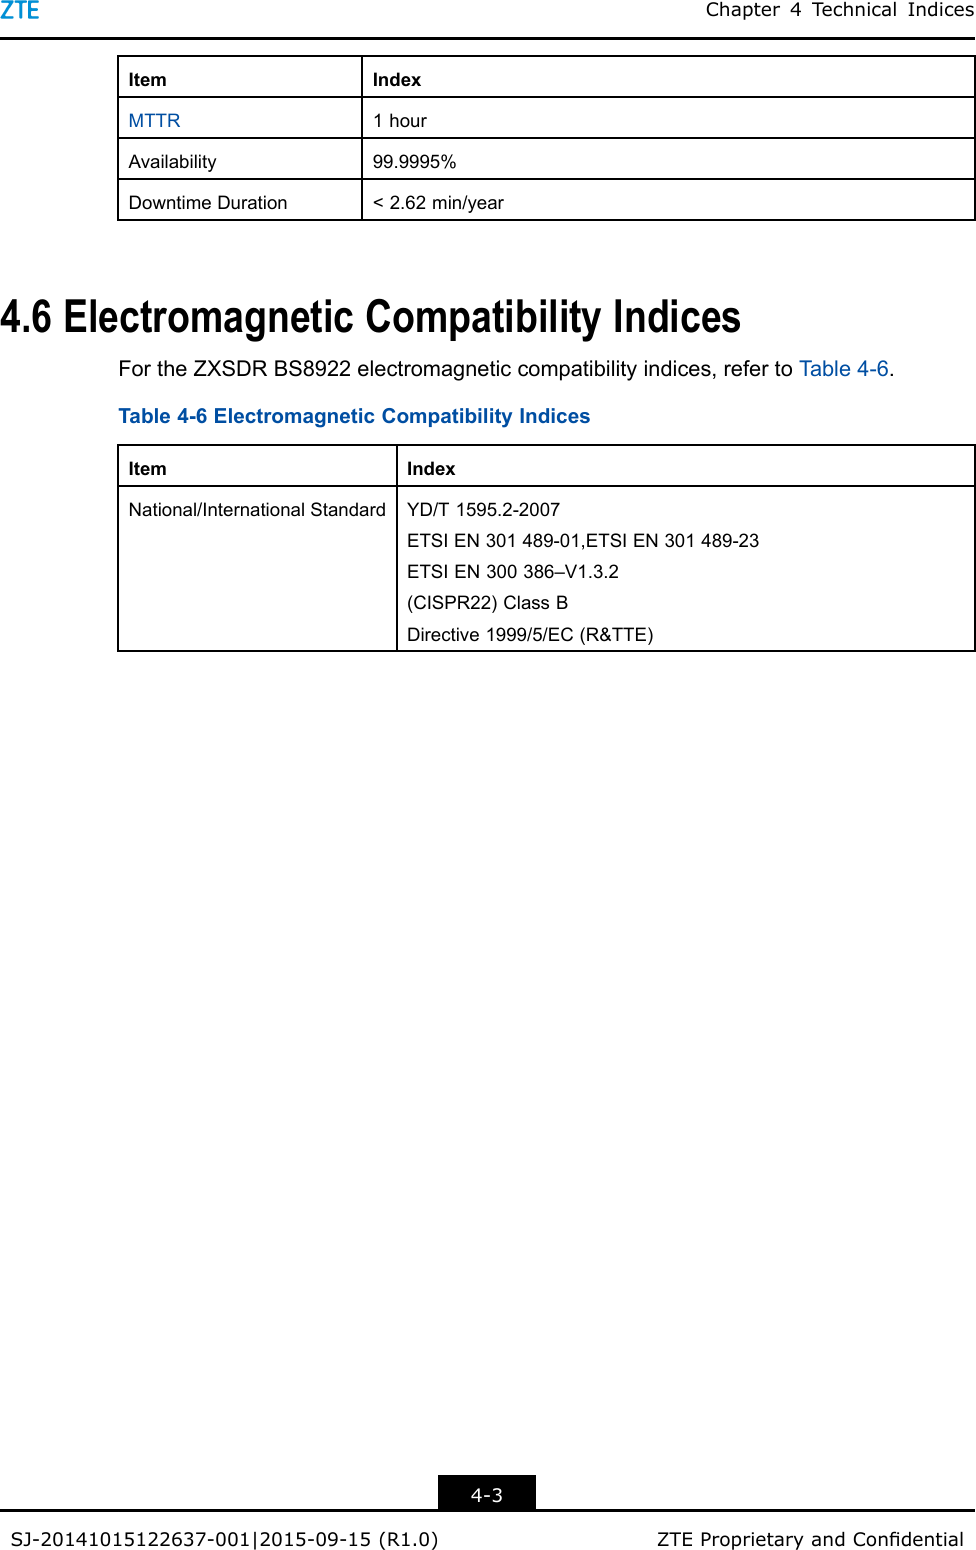 Chapter4T echnicalIndicesItemIndexMTTR1hourAvailability99.9995%DowntimeDuration&lt;2.62min/year4.6ElectromagneticCompatibilityIndicesFortheZXSDRBS8922electromagneticcompatibilityindices,refertoTable4-6.Table4-6ElectromagneticCompatibilityIndicesItemIndexNational/InternationalStandardYD/T1595.2-2007ETSIEN301489-01,ETSIEN301489-23ETSIEN300386–V1.3.2(CISPR22)ClassBDirective1999/5/EC(R&amp;TTE)4-3SJ-20141015122637-001|2015-09-15(R1.0)ZTEProprietaryandCondential